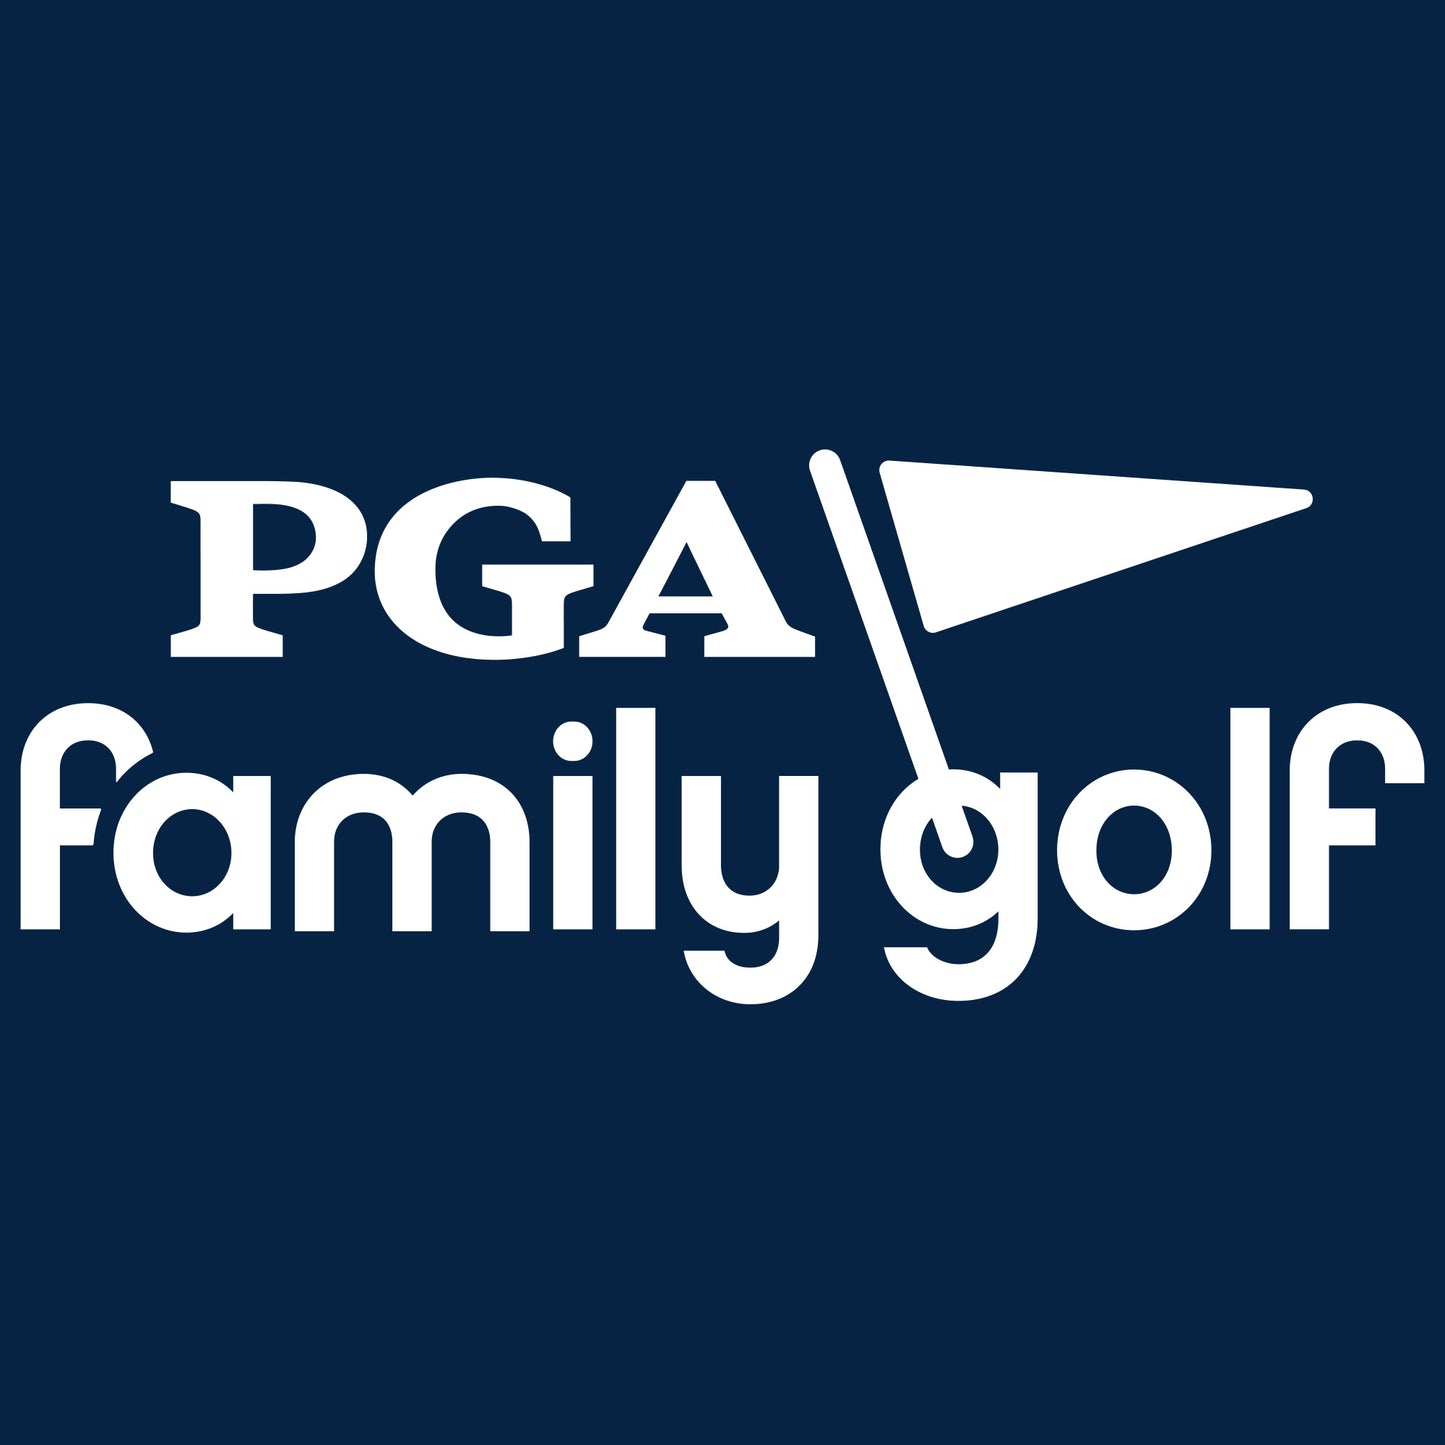 PGA Family Golf Adult T-Shirt - Navy